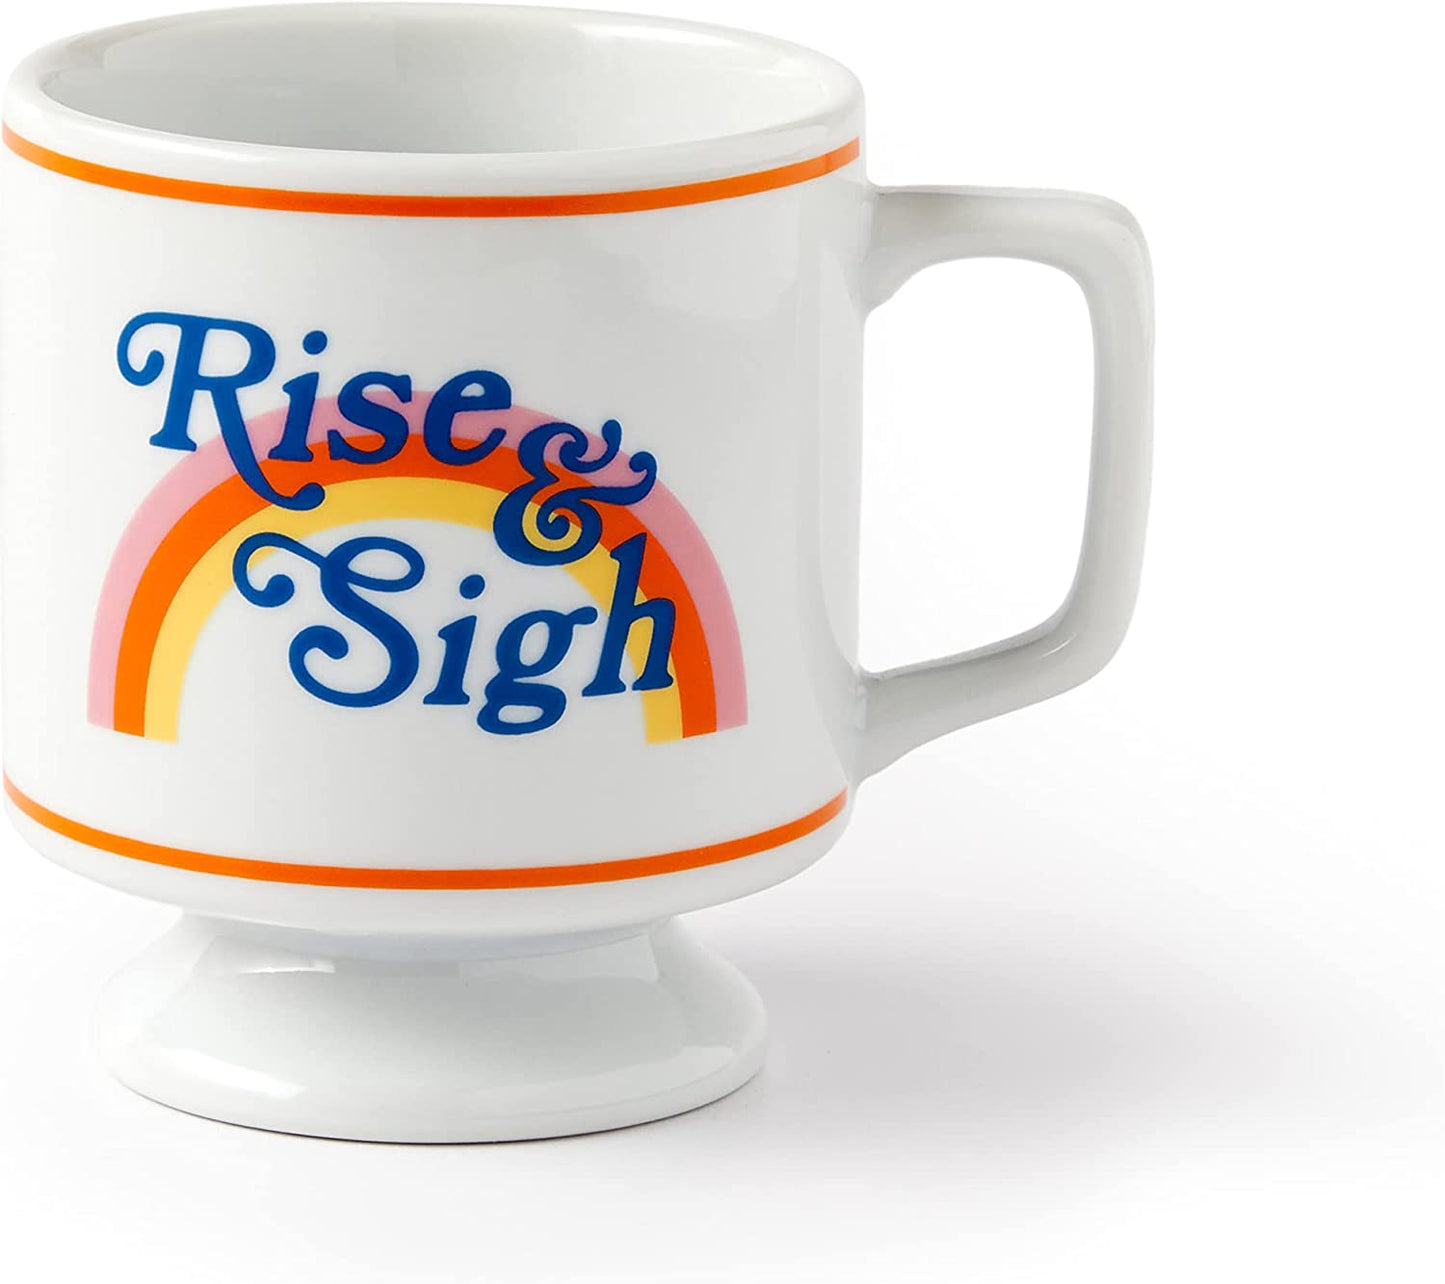 Rise & Sigh Pedestal Mug